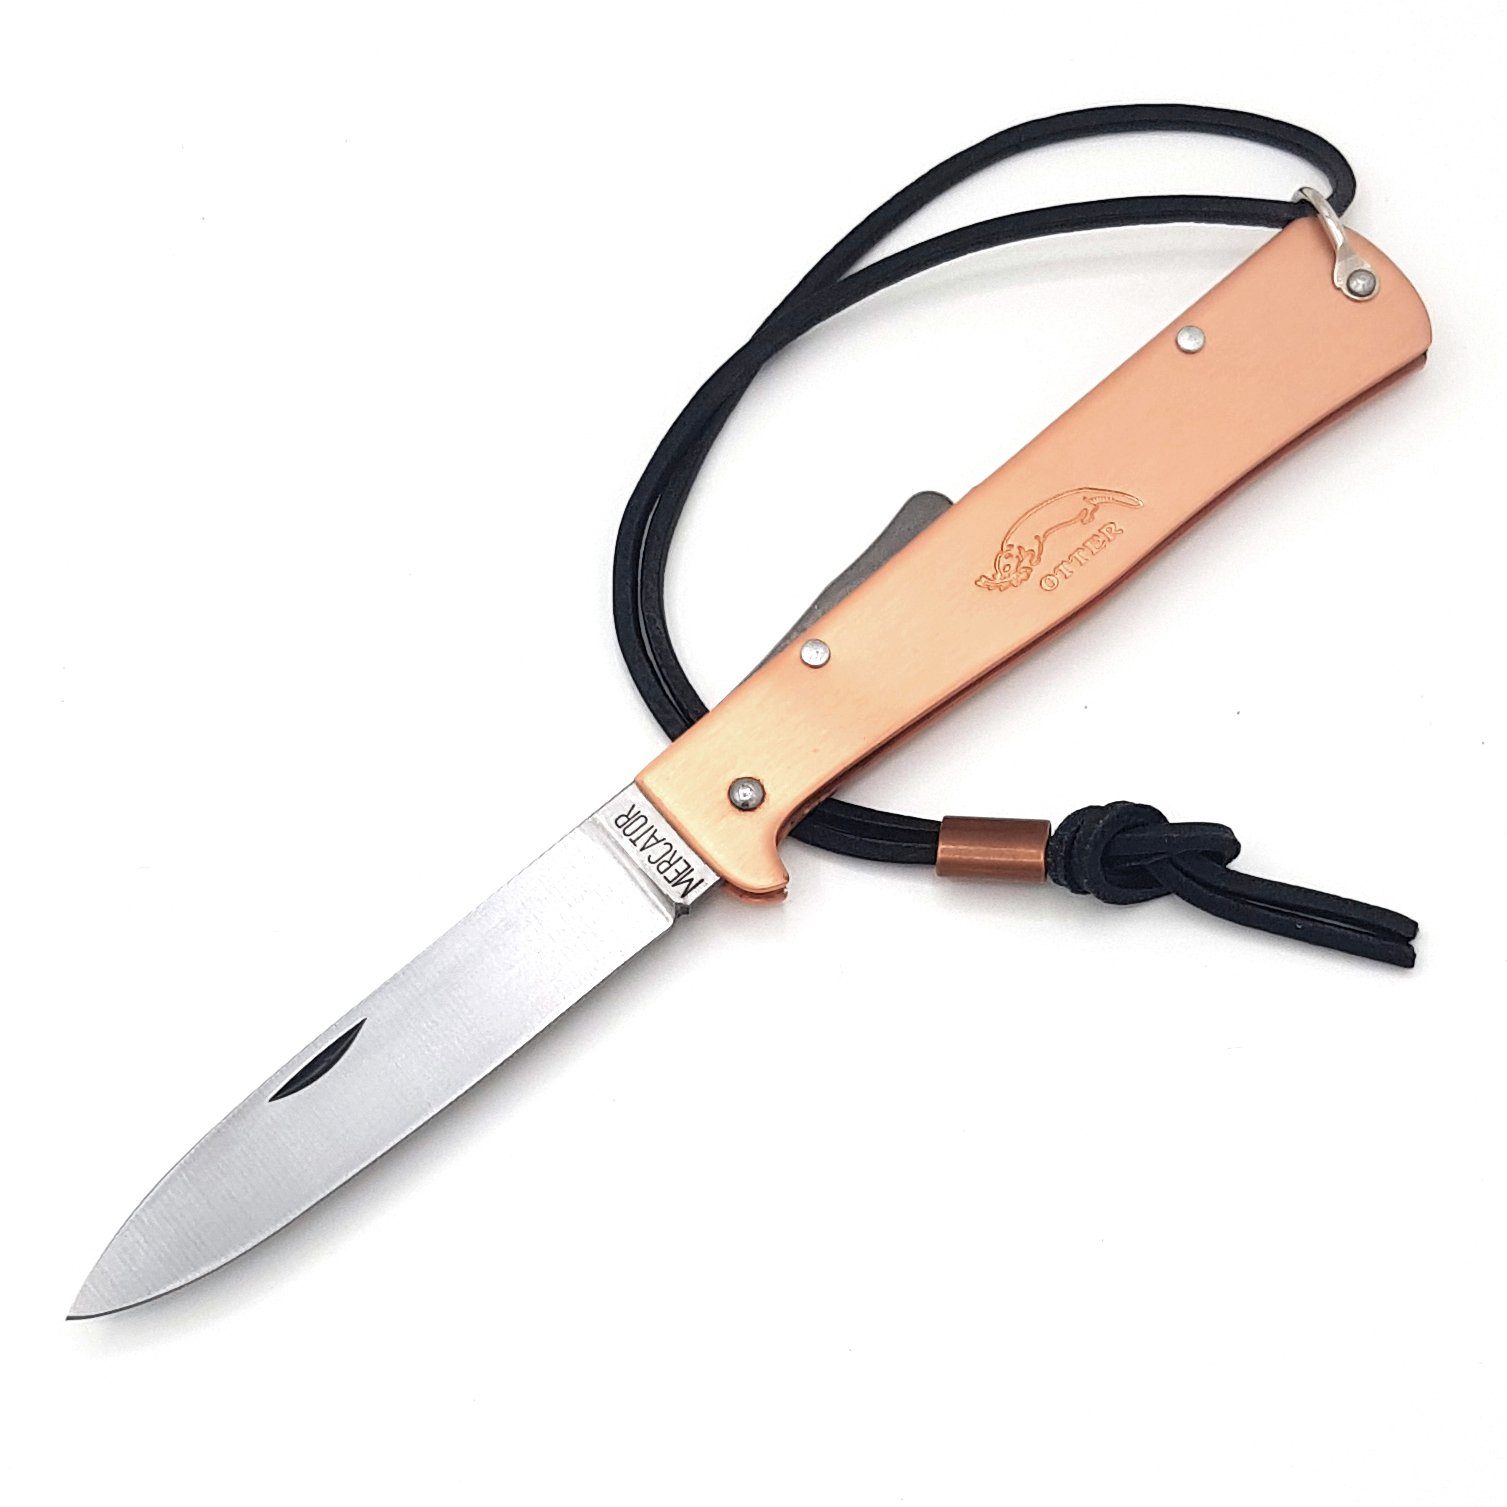 Otter Messer Taschenmesser Mercator-Messer groß Kupfer mit Lederband, Klinge Carbonstahl, Backlock